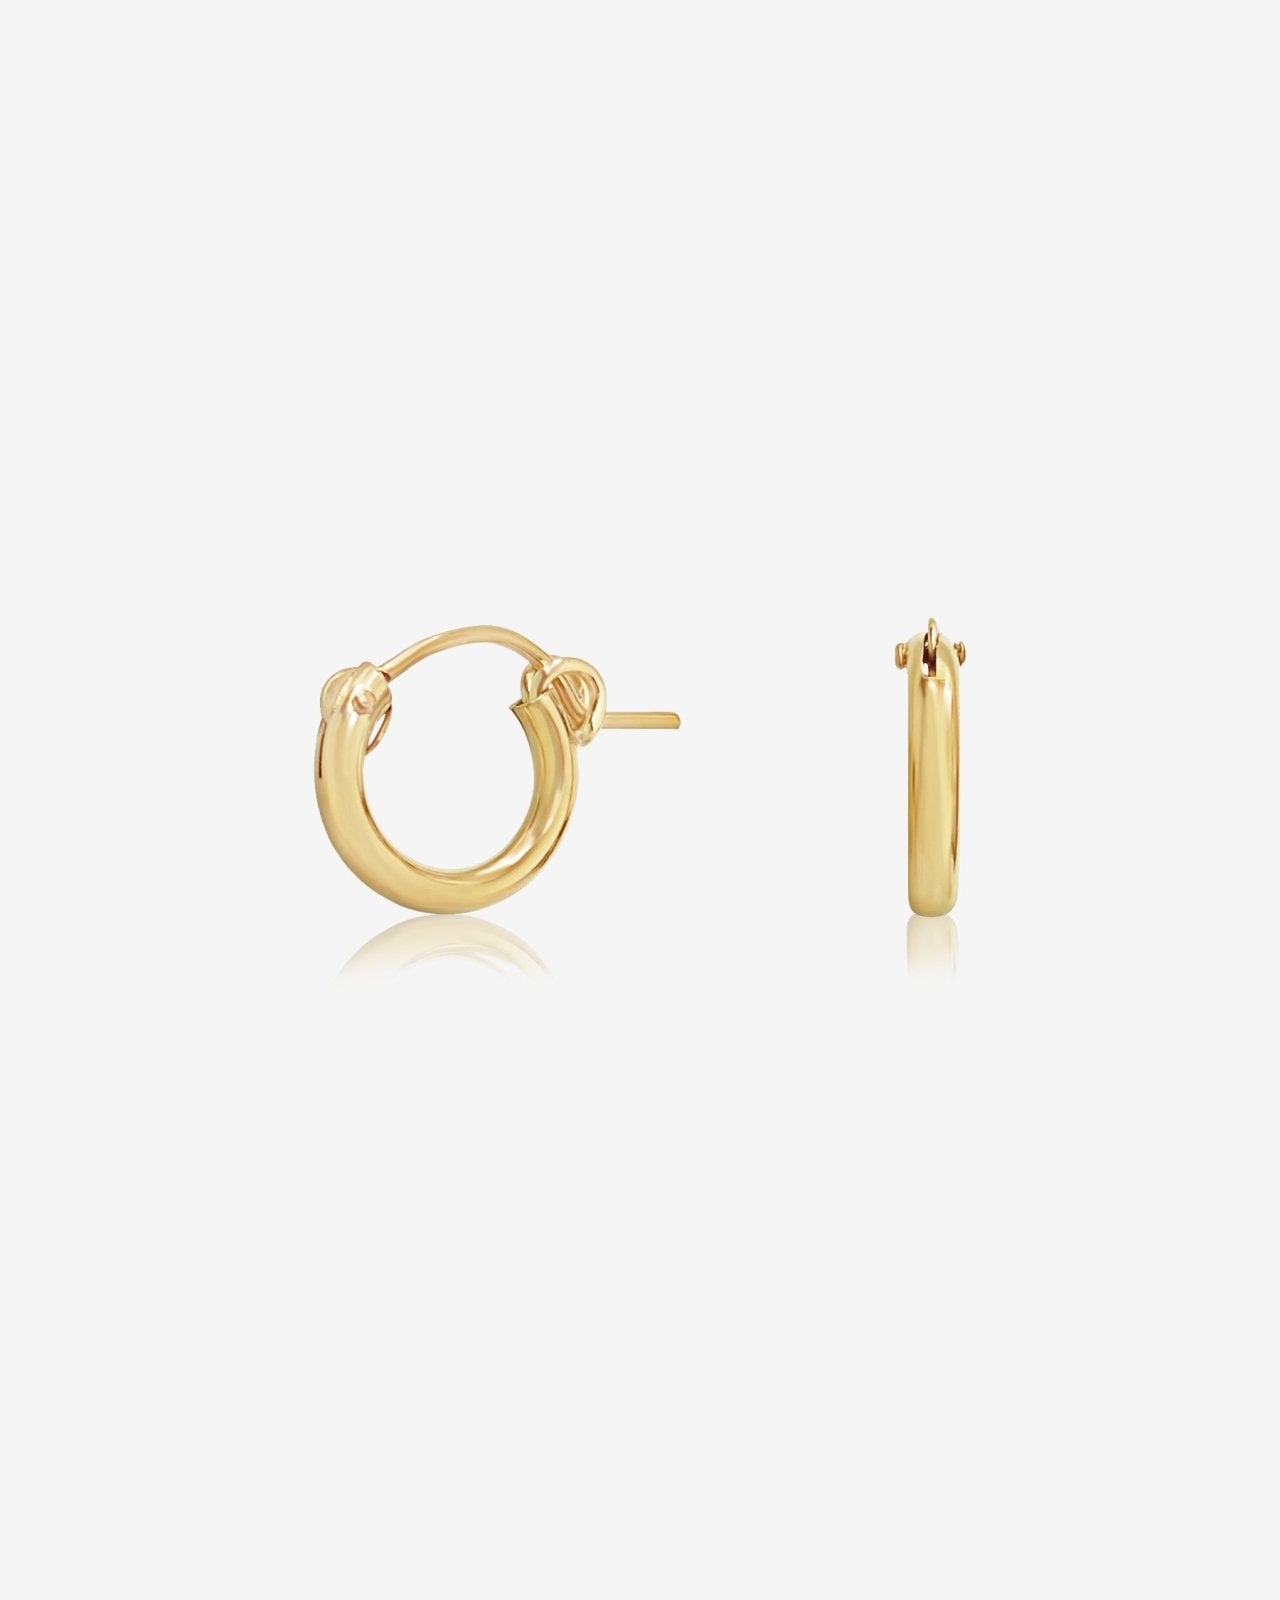 10K YG 3-piece Hoop Earring Set - Quality Gold